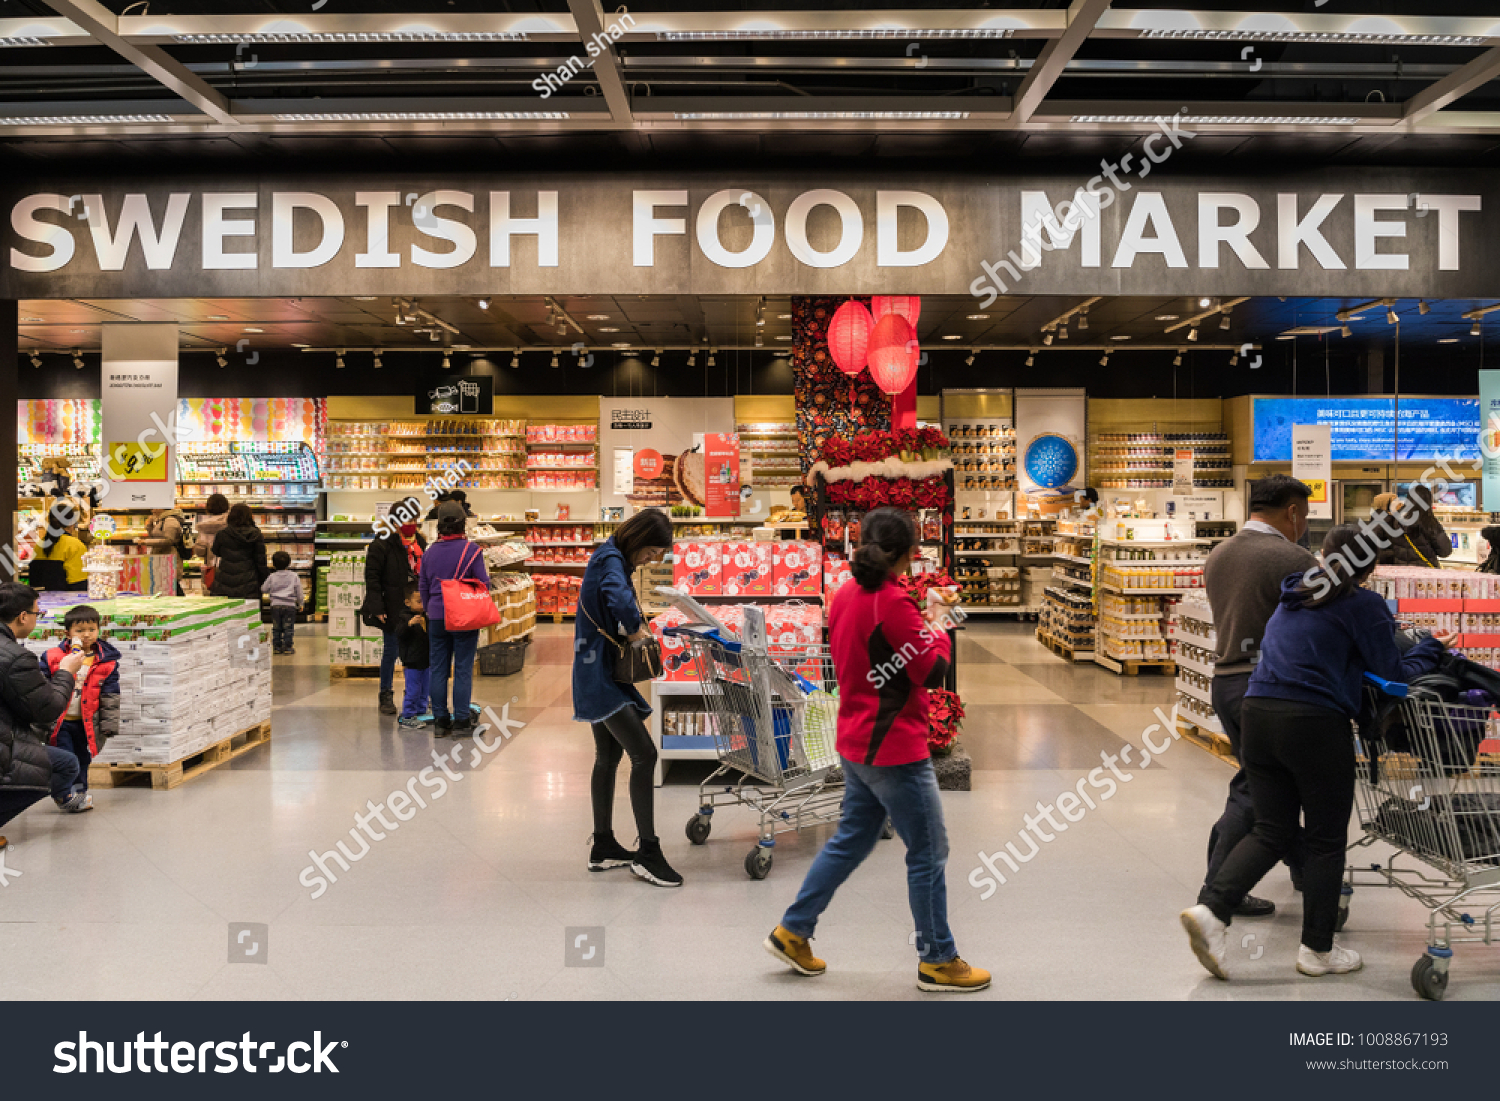 Food market swedish Swedish food